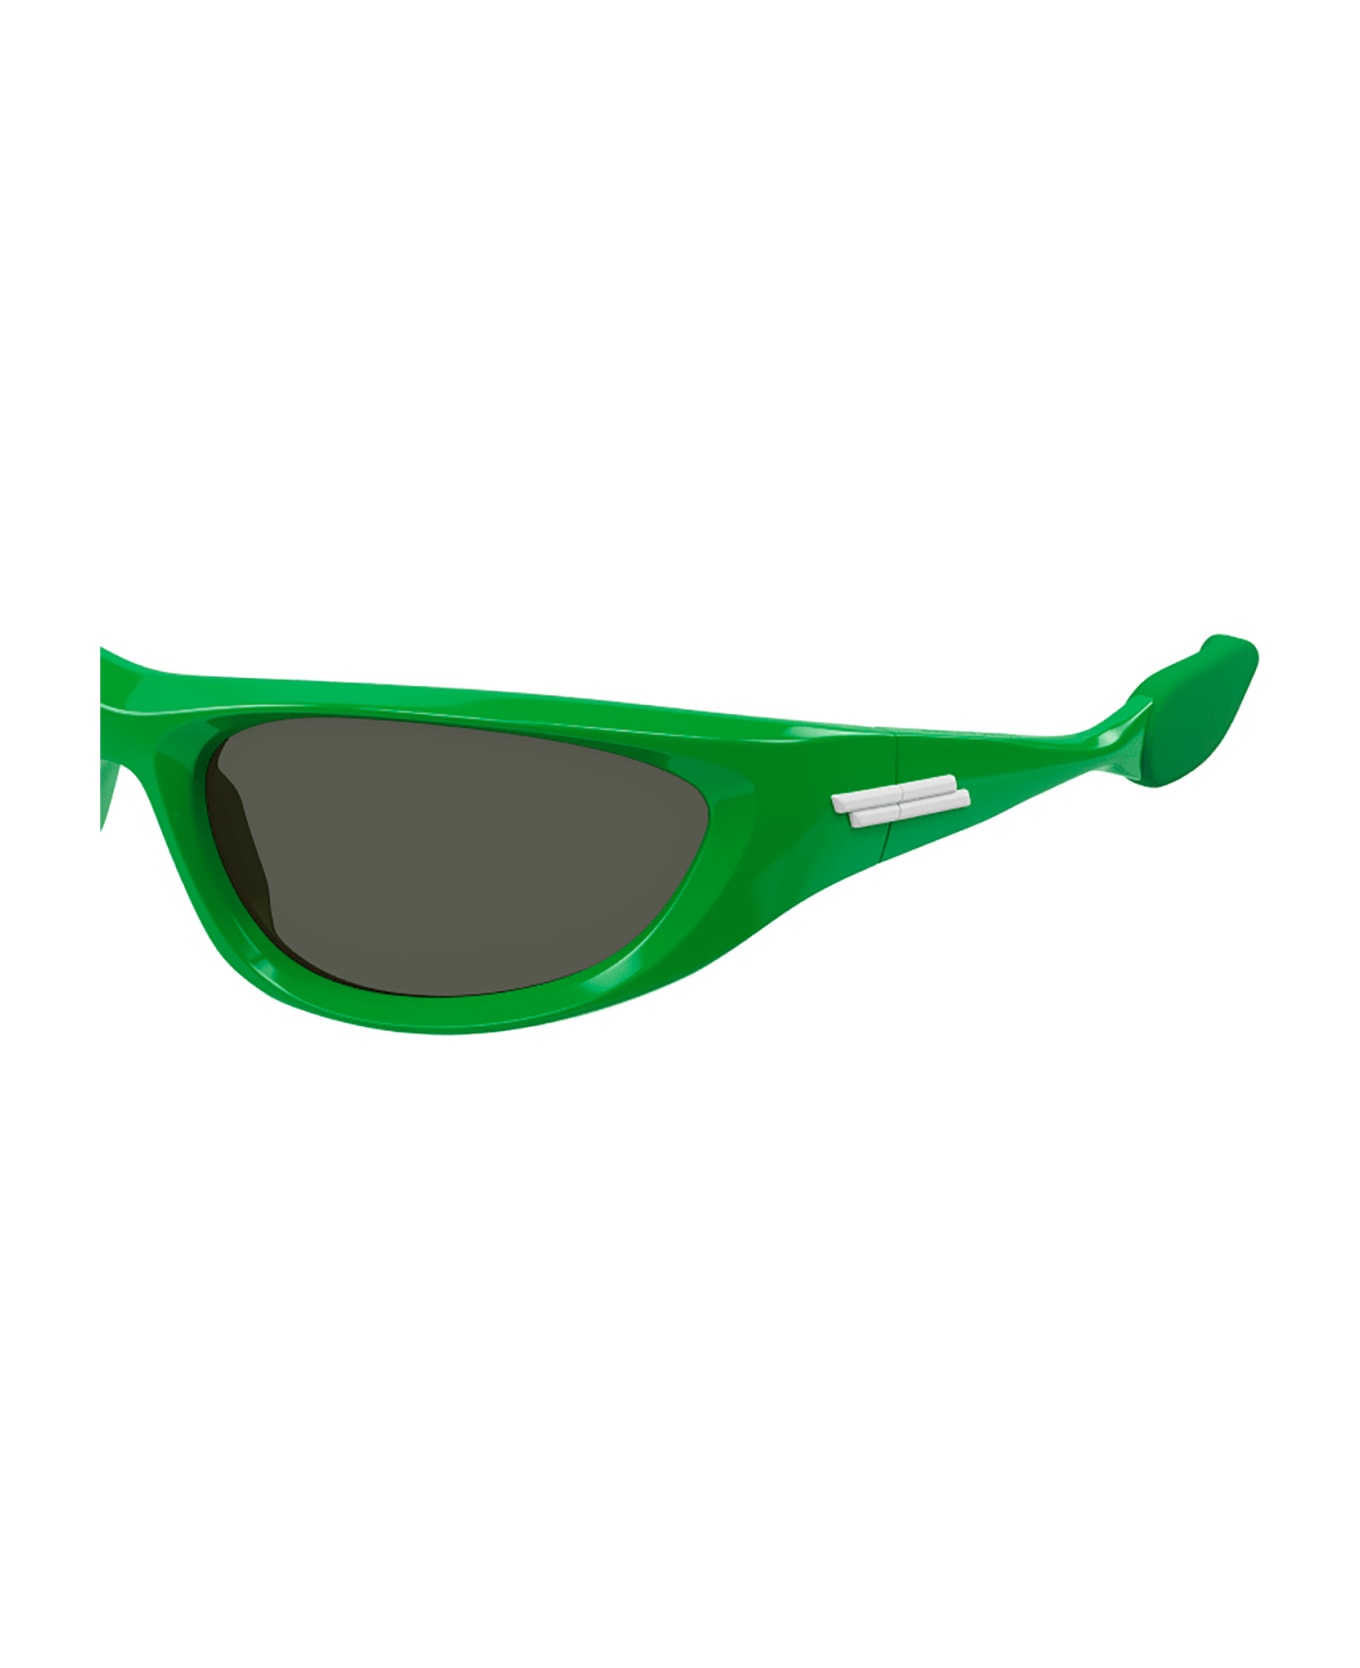 Bottega Veneta Eyewear 1e404id0a - Chpo Mcfly Unisex Sunglasses